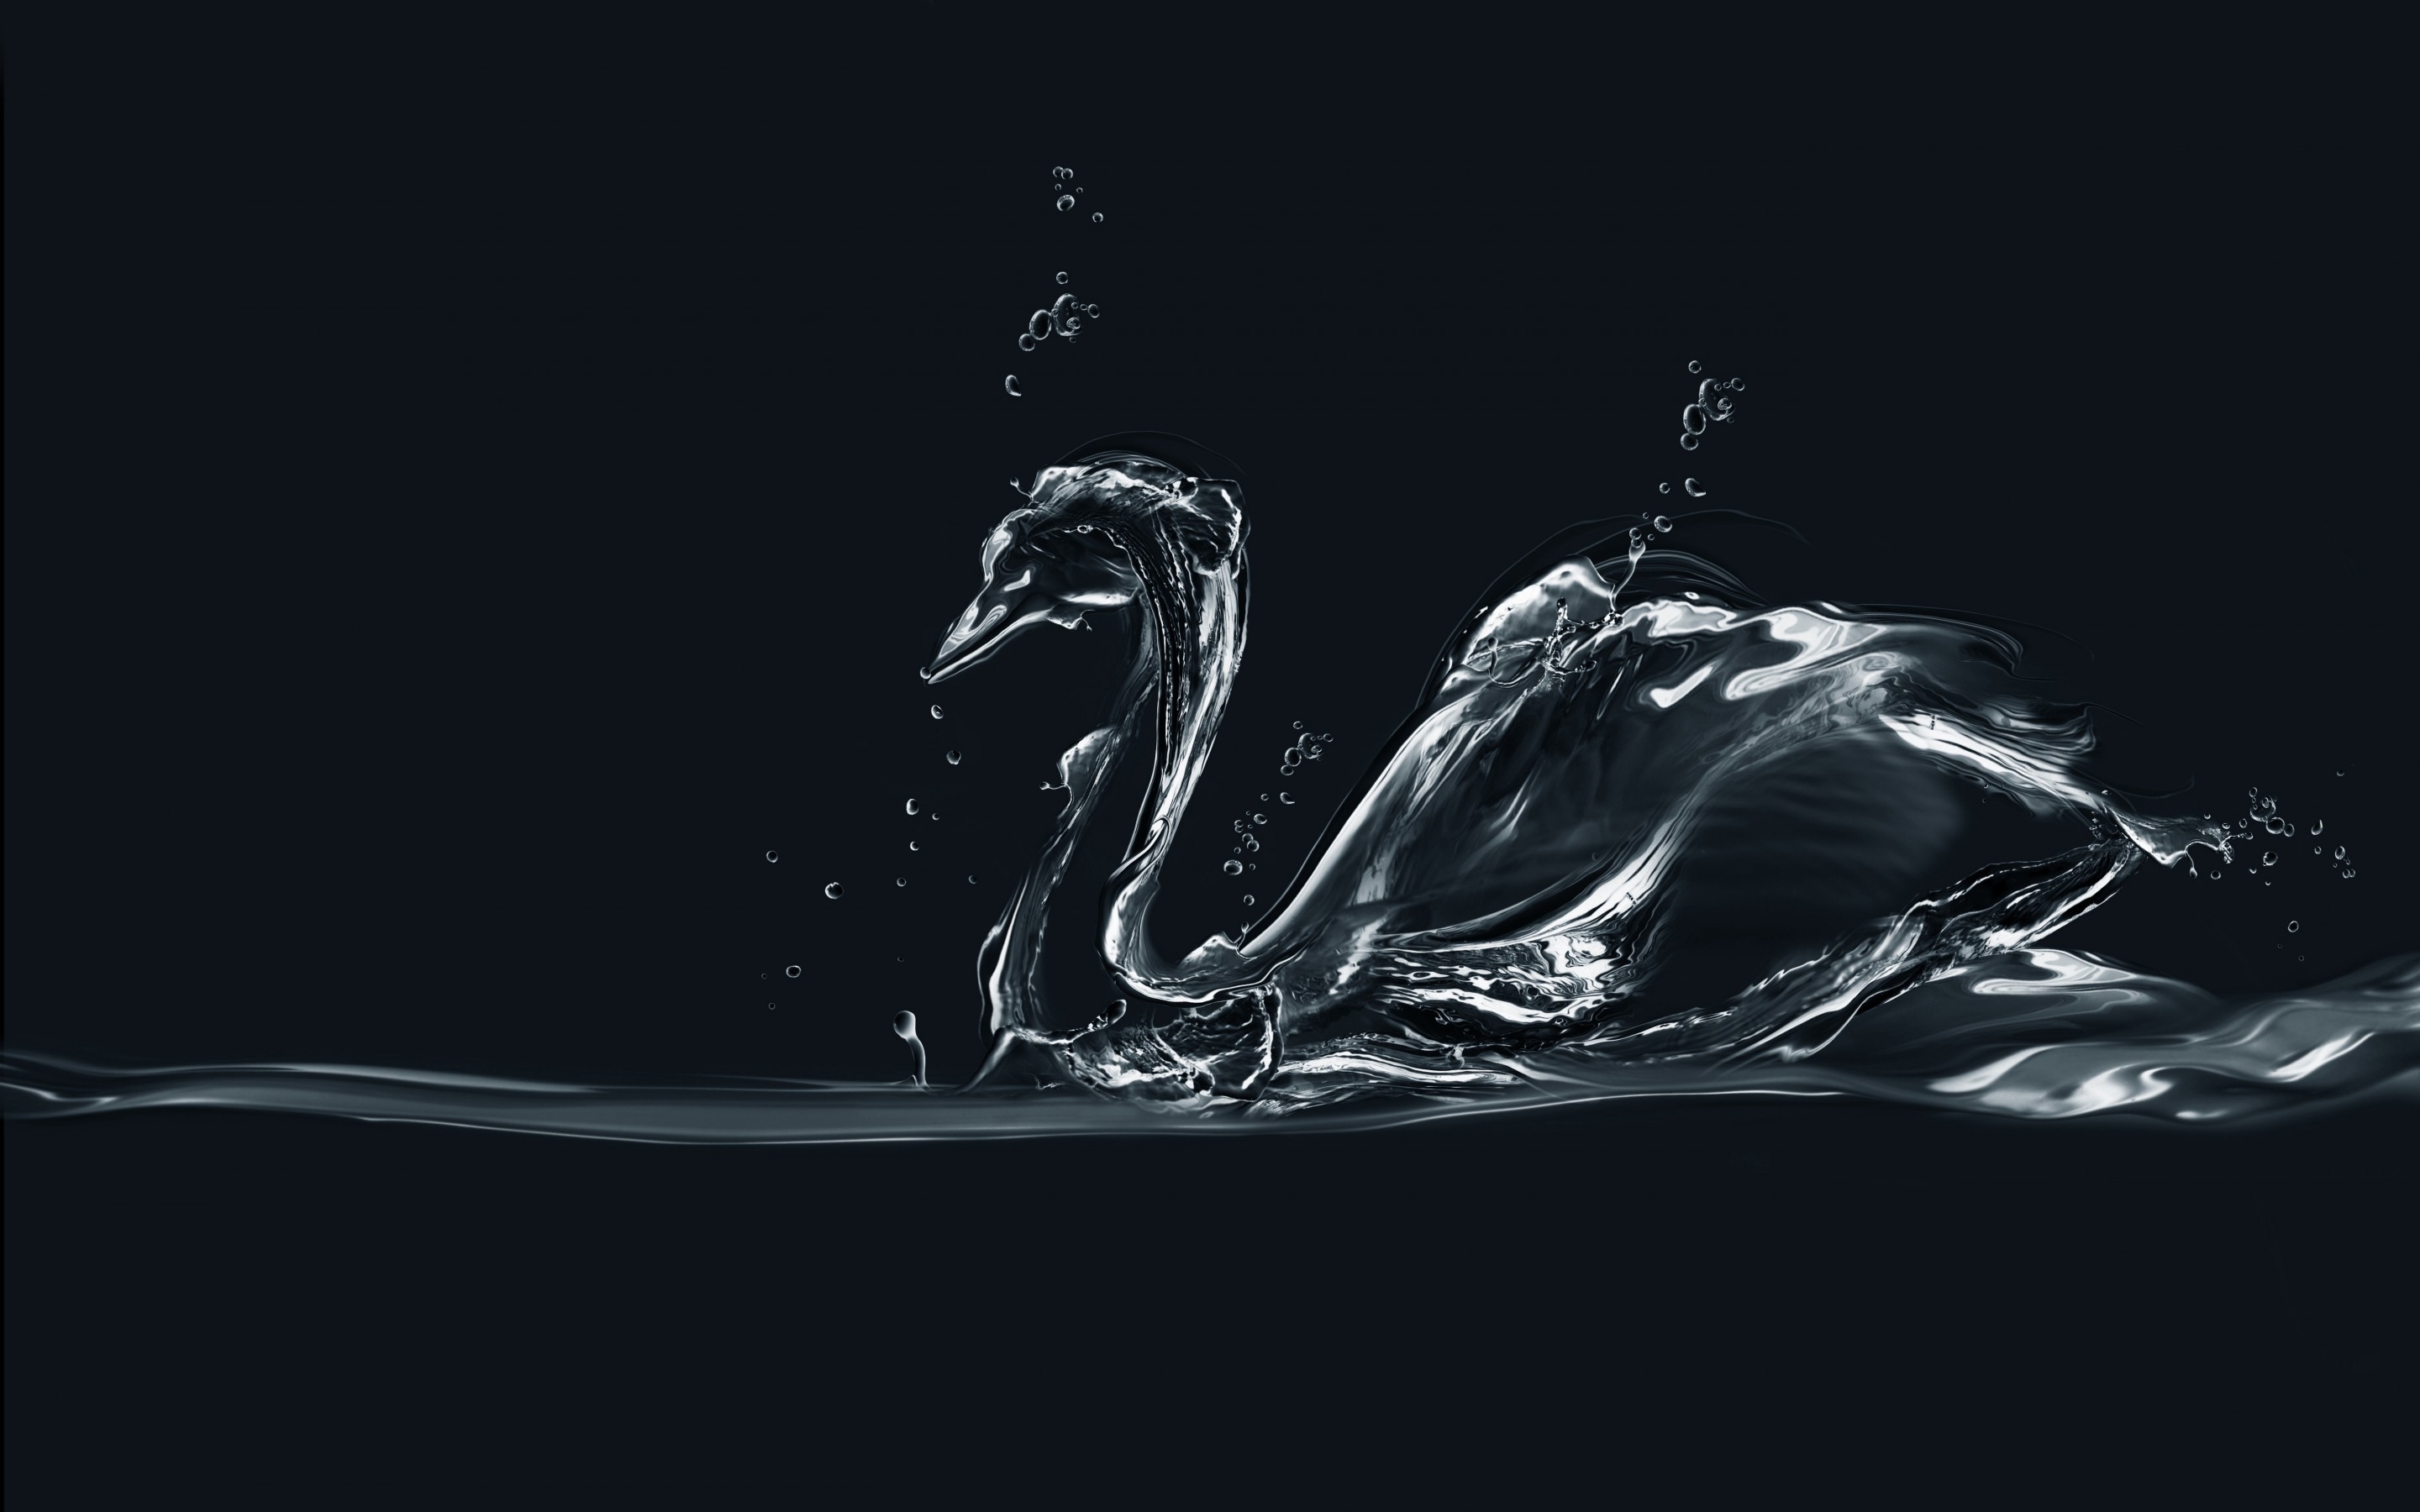 Water Swan for 2880 x 1800 Retina Display resolution